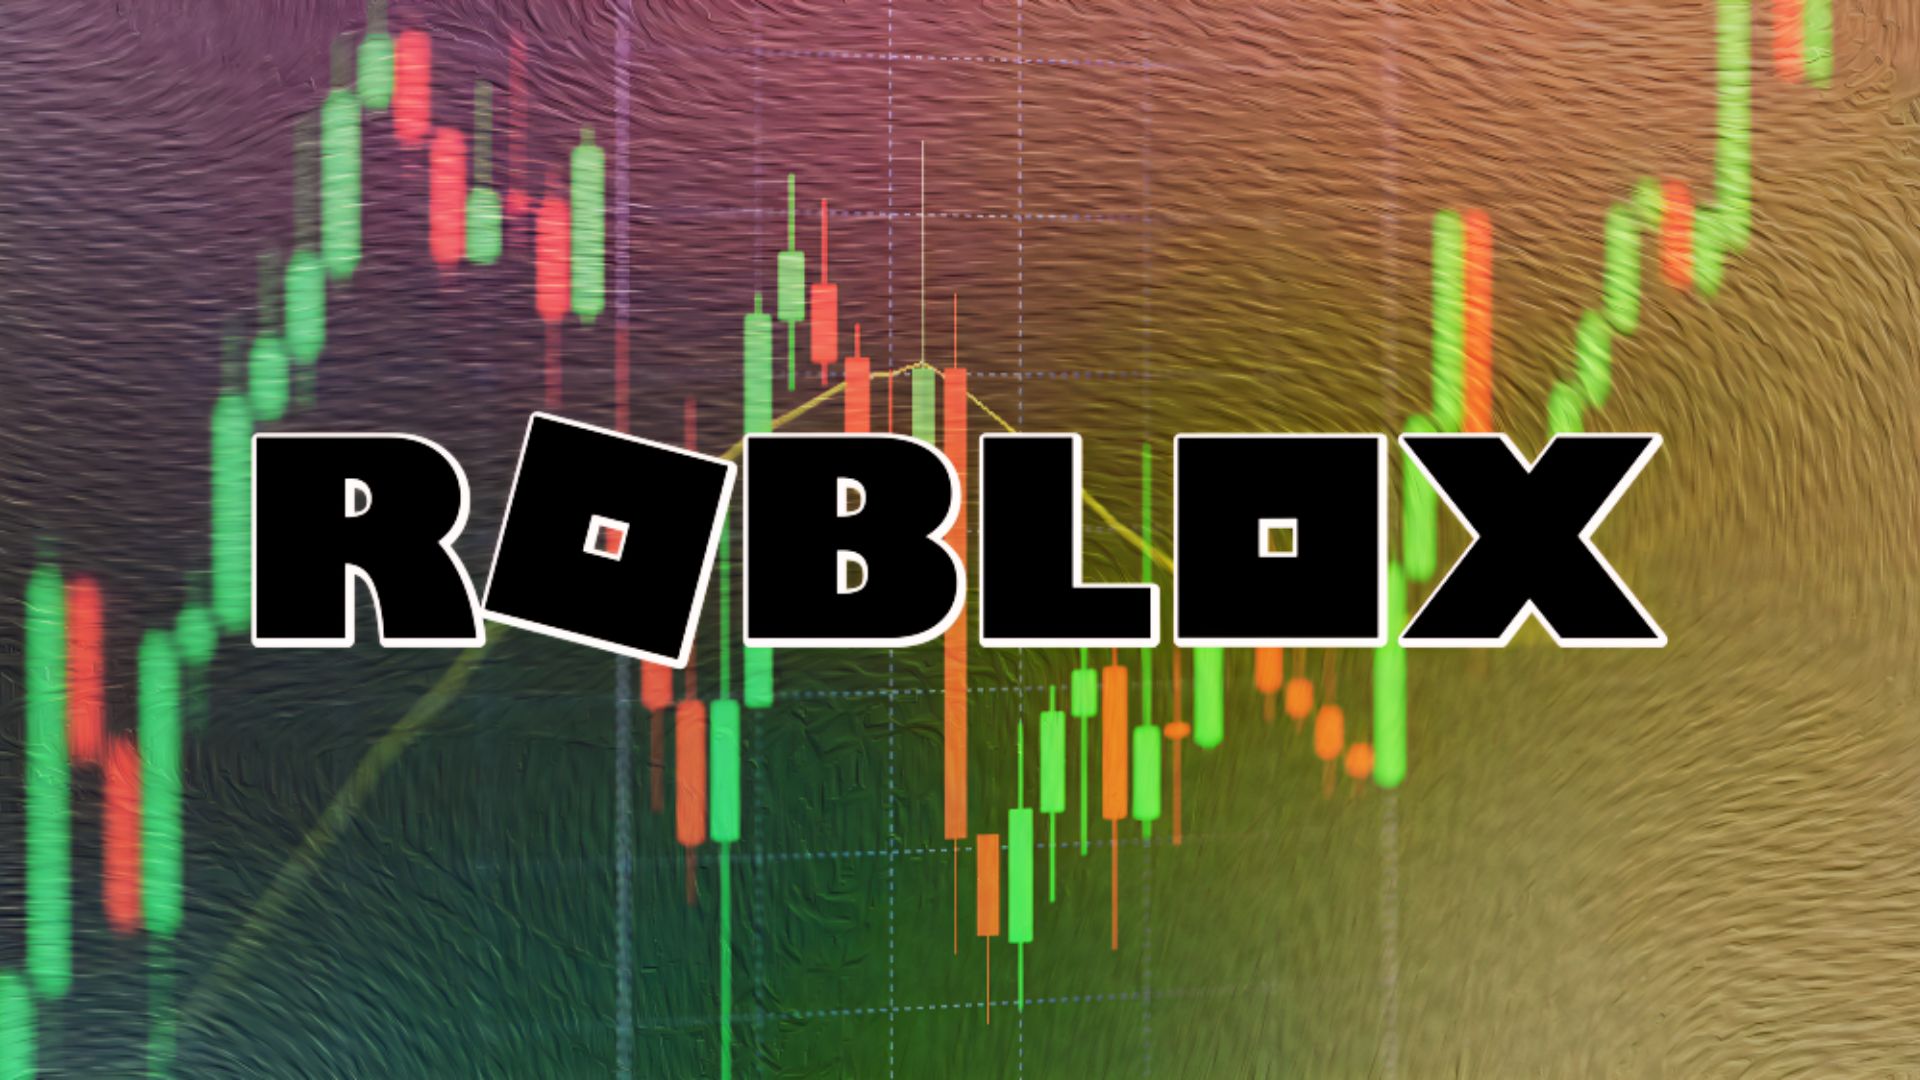 Roblox (RBLX) earnings Q2 2023